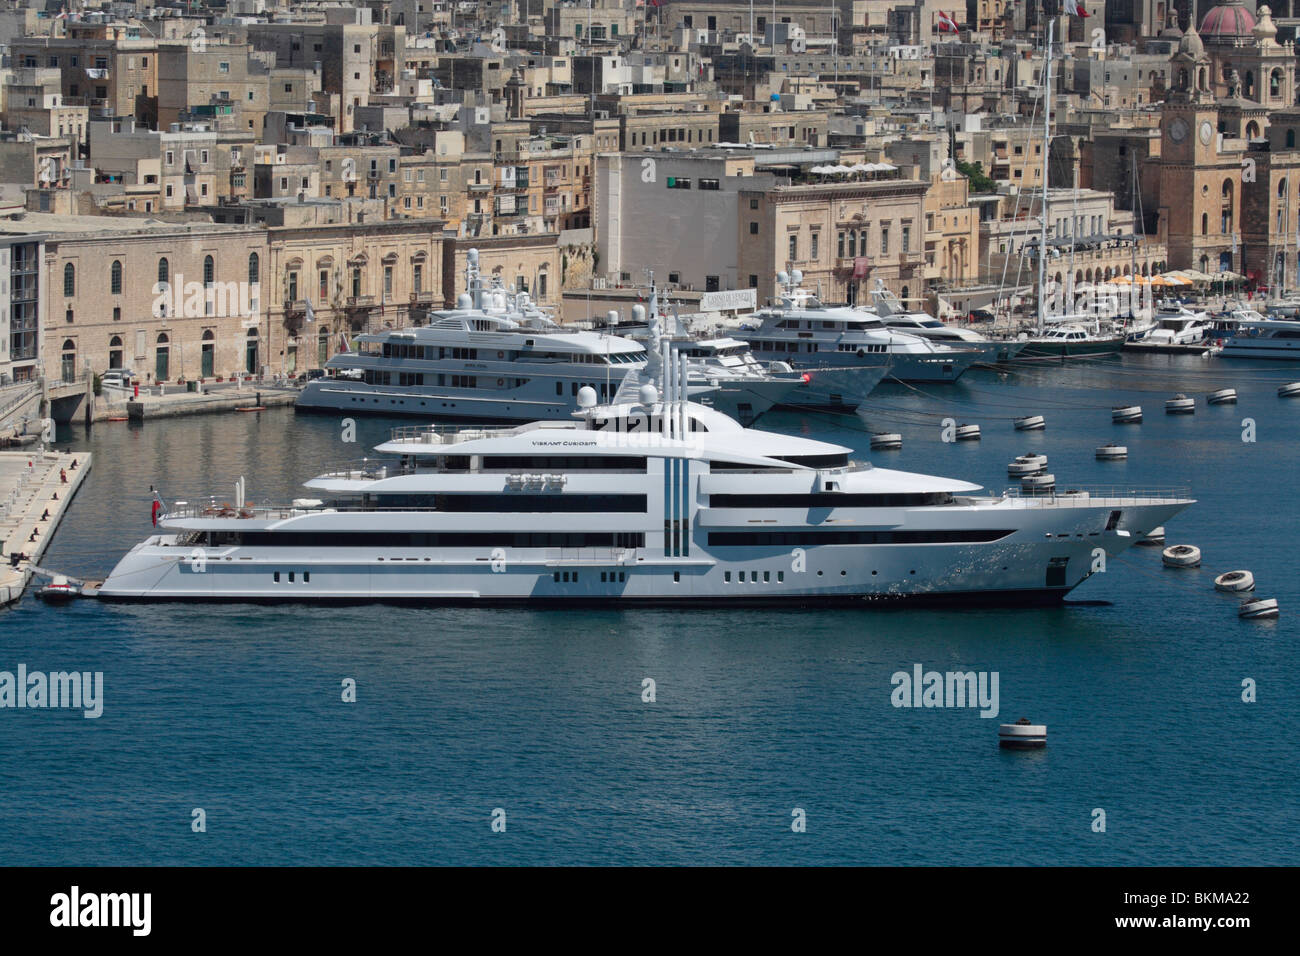 The superyacht Vibrant Curiosity in Malta's Grand Harbour Stock Photo